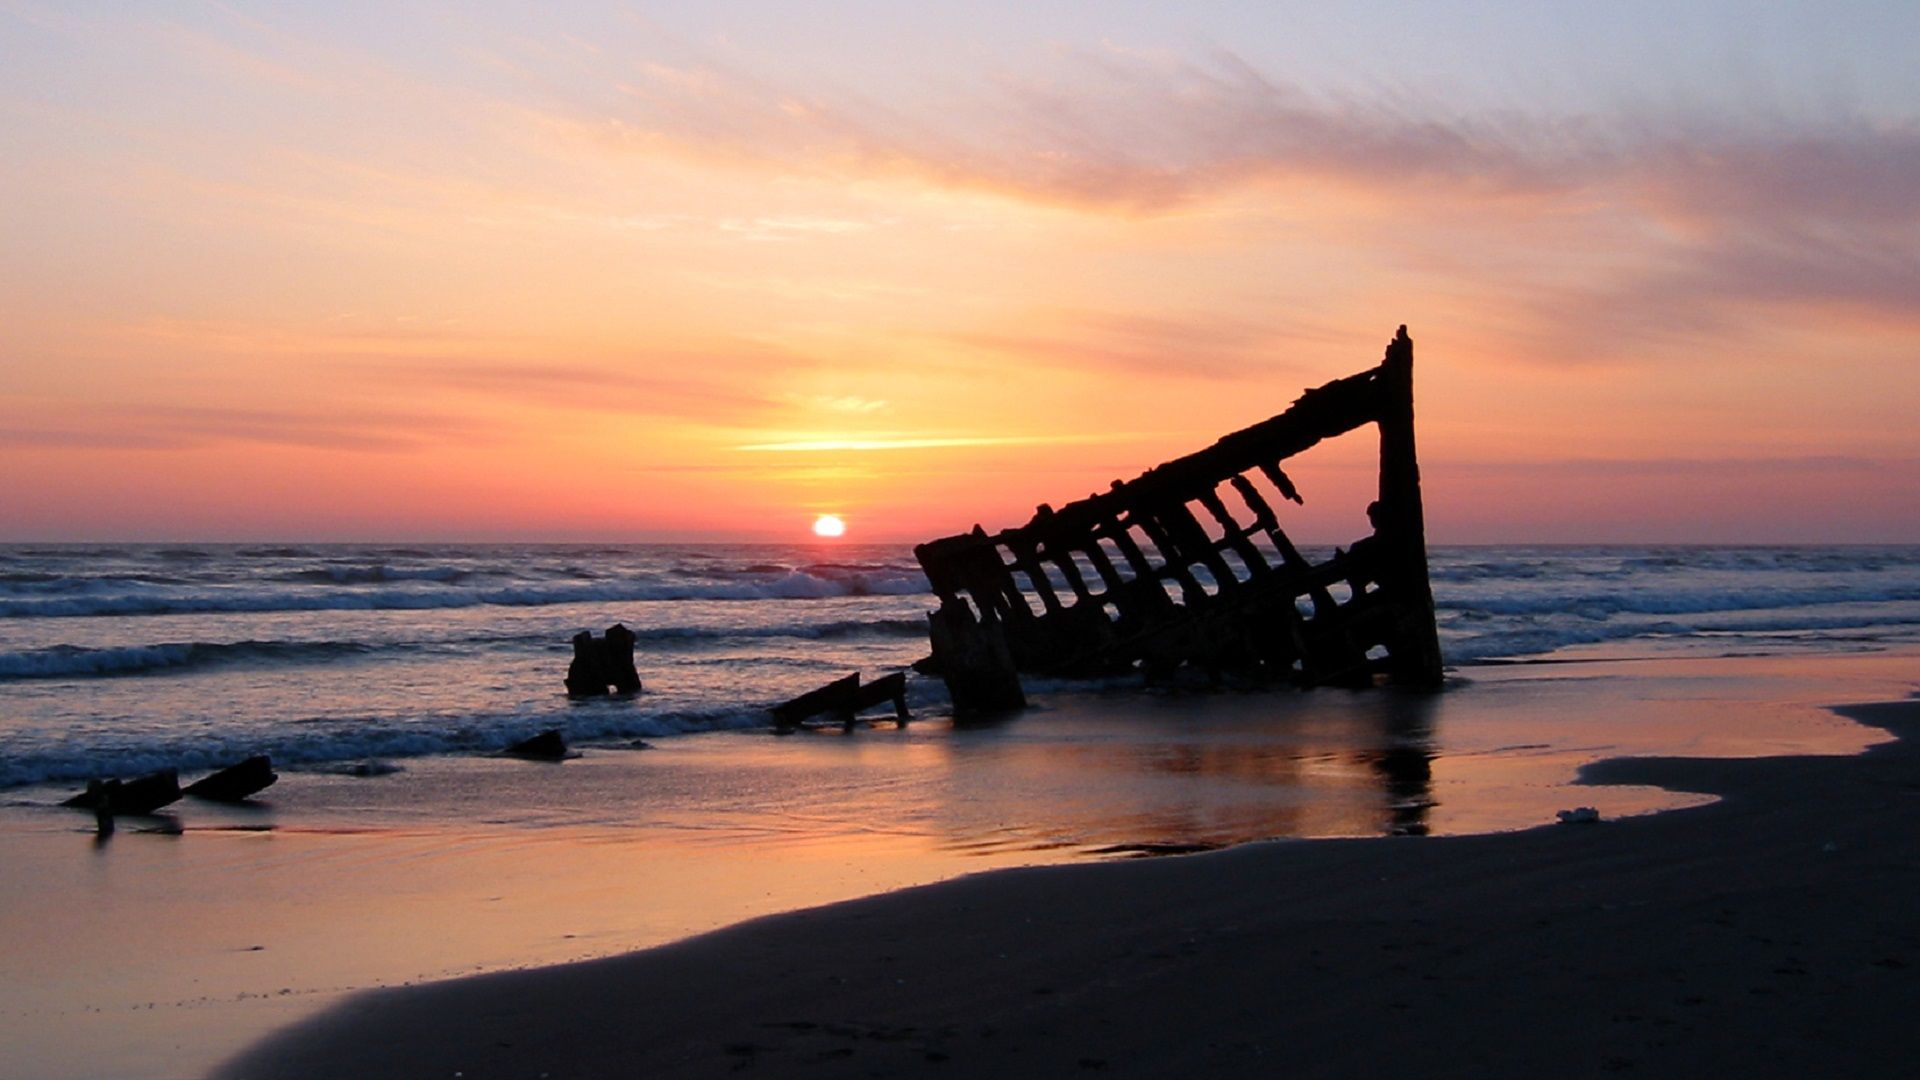 Wrecked ship at beach 